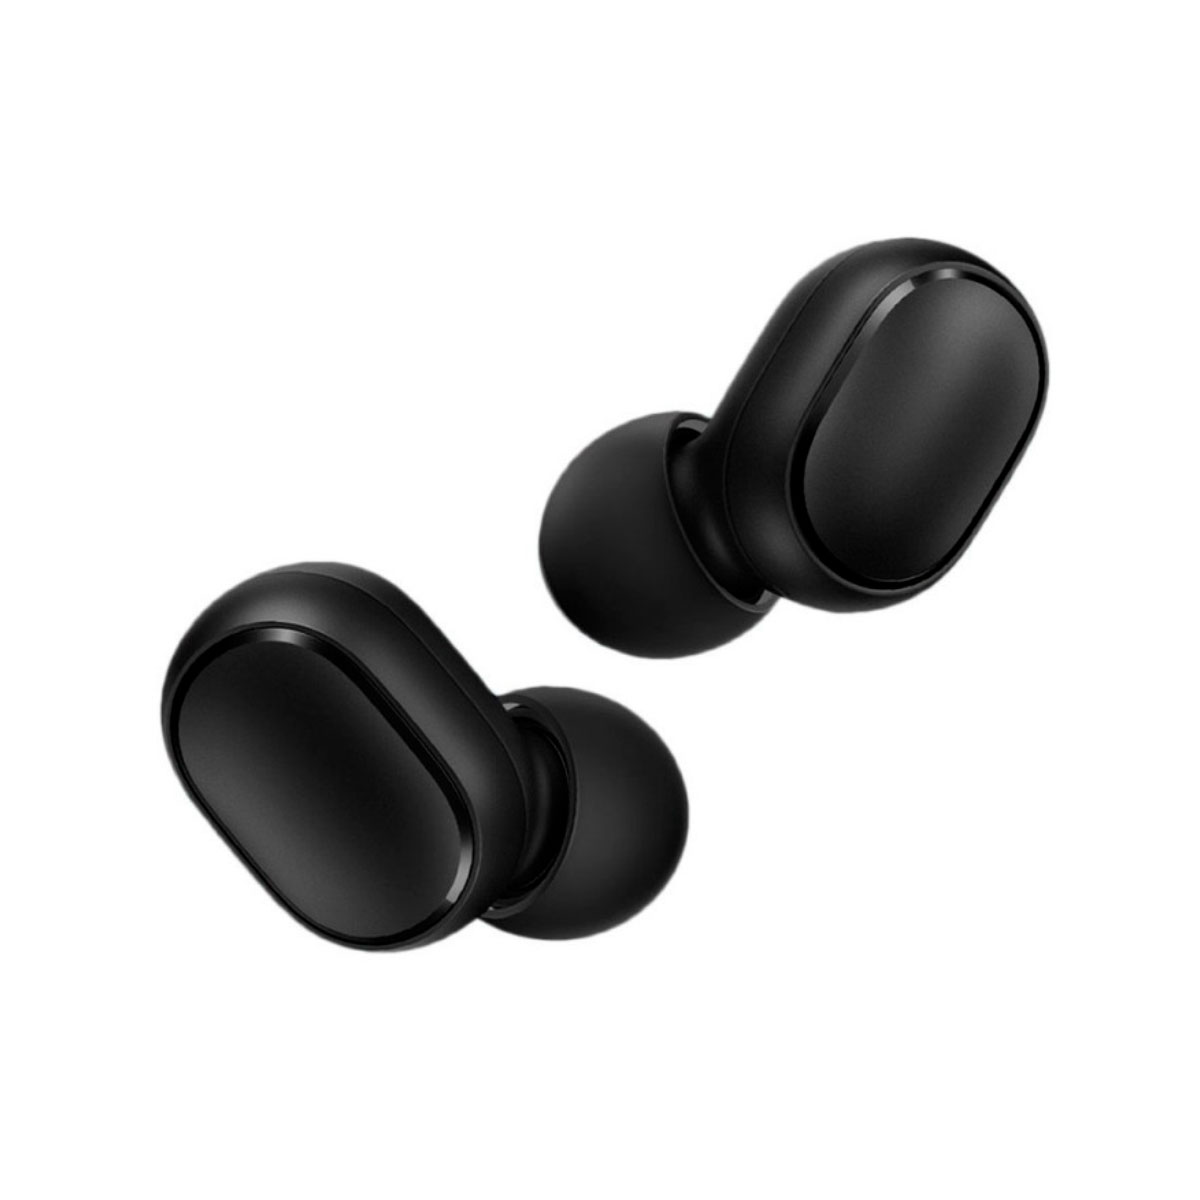 Fone de Ouvido Bluetooth Earbud Xiaomi Redmi Airdots - Earbuds Basic 2 - Case Carregador - Preto